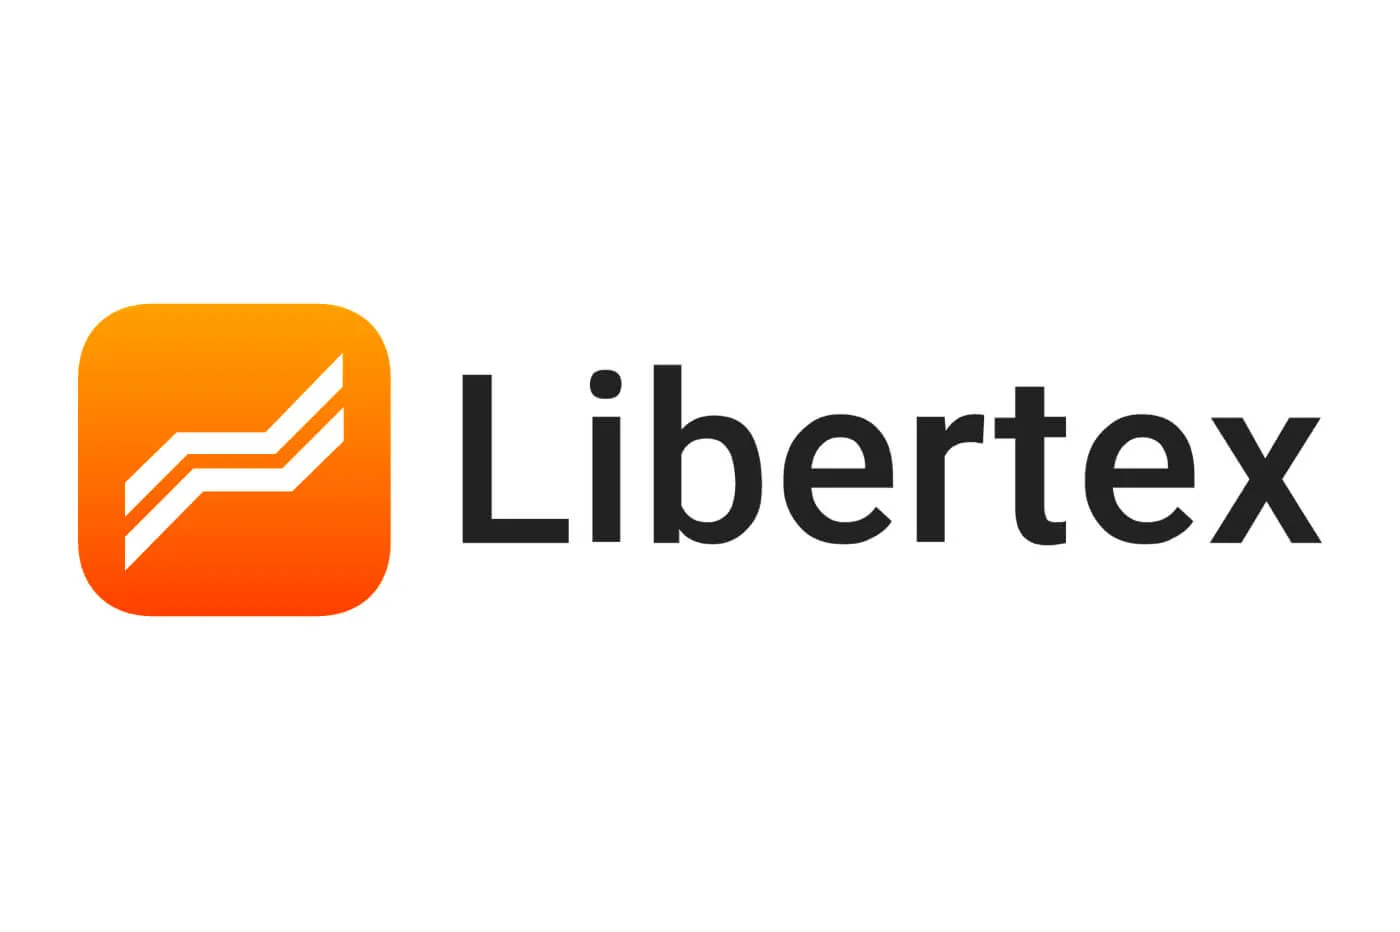 Notre avis sur Libertex